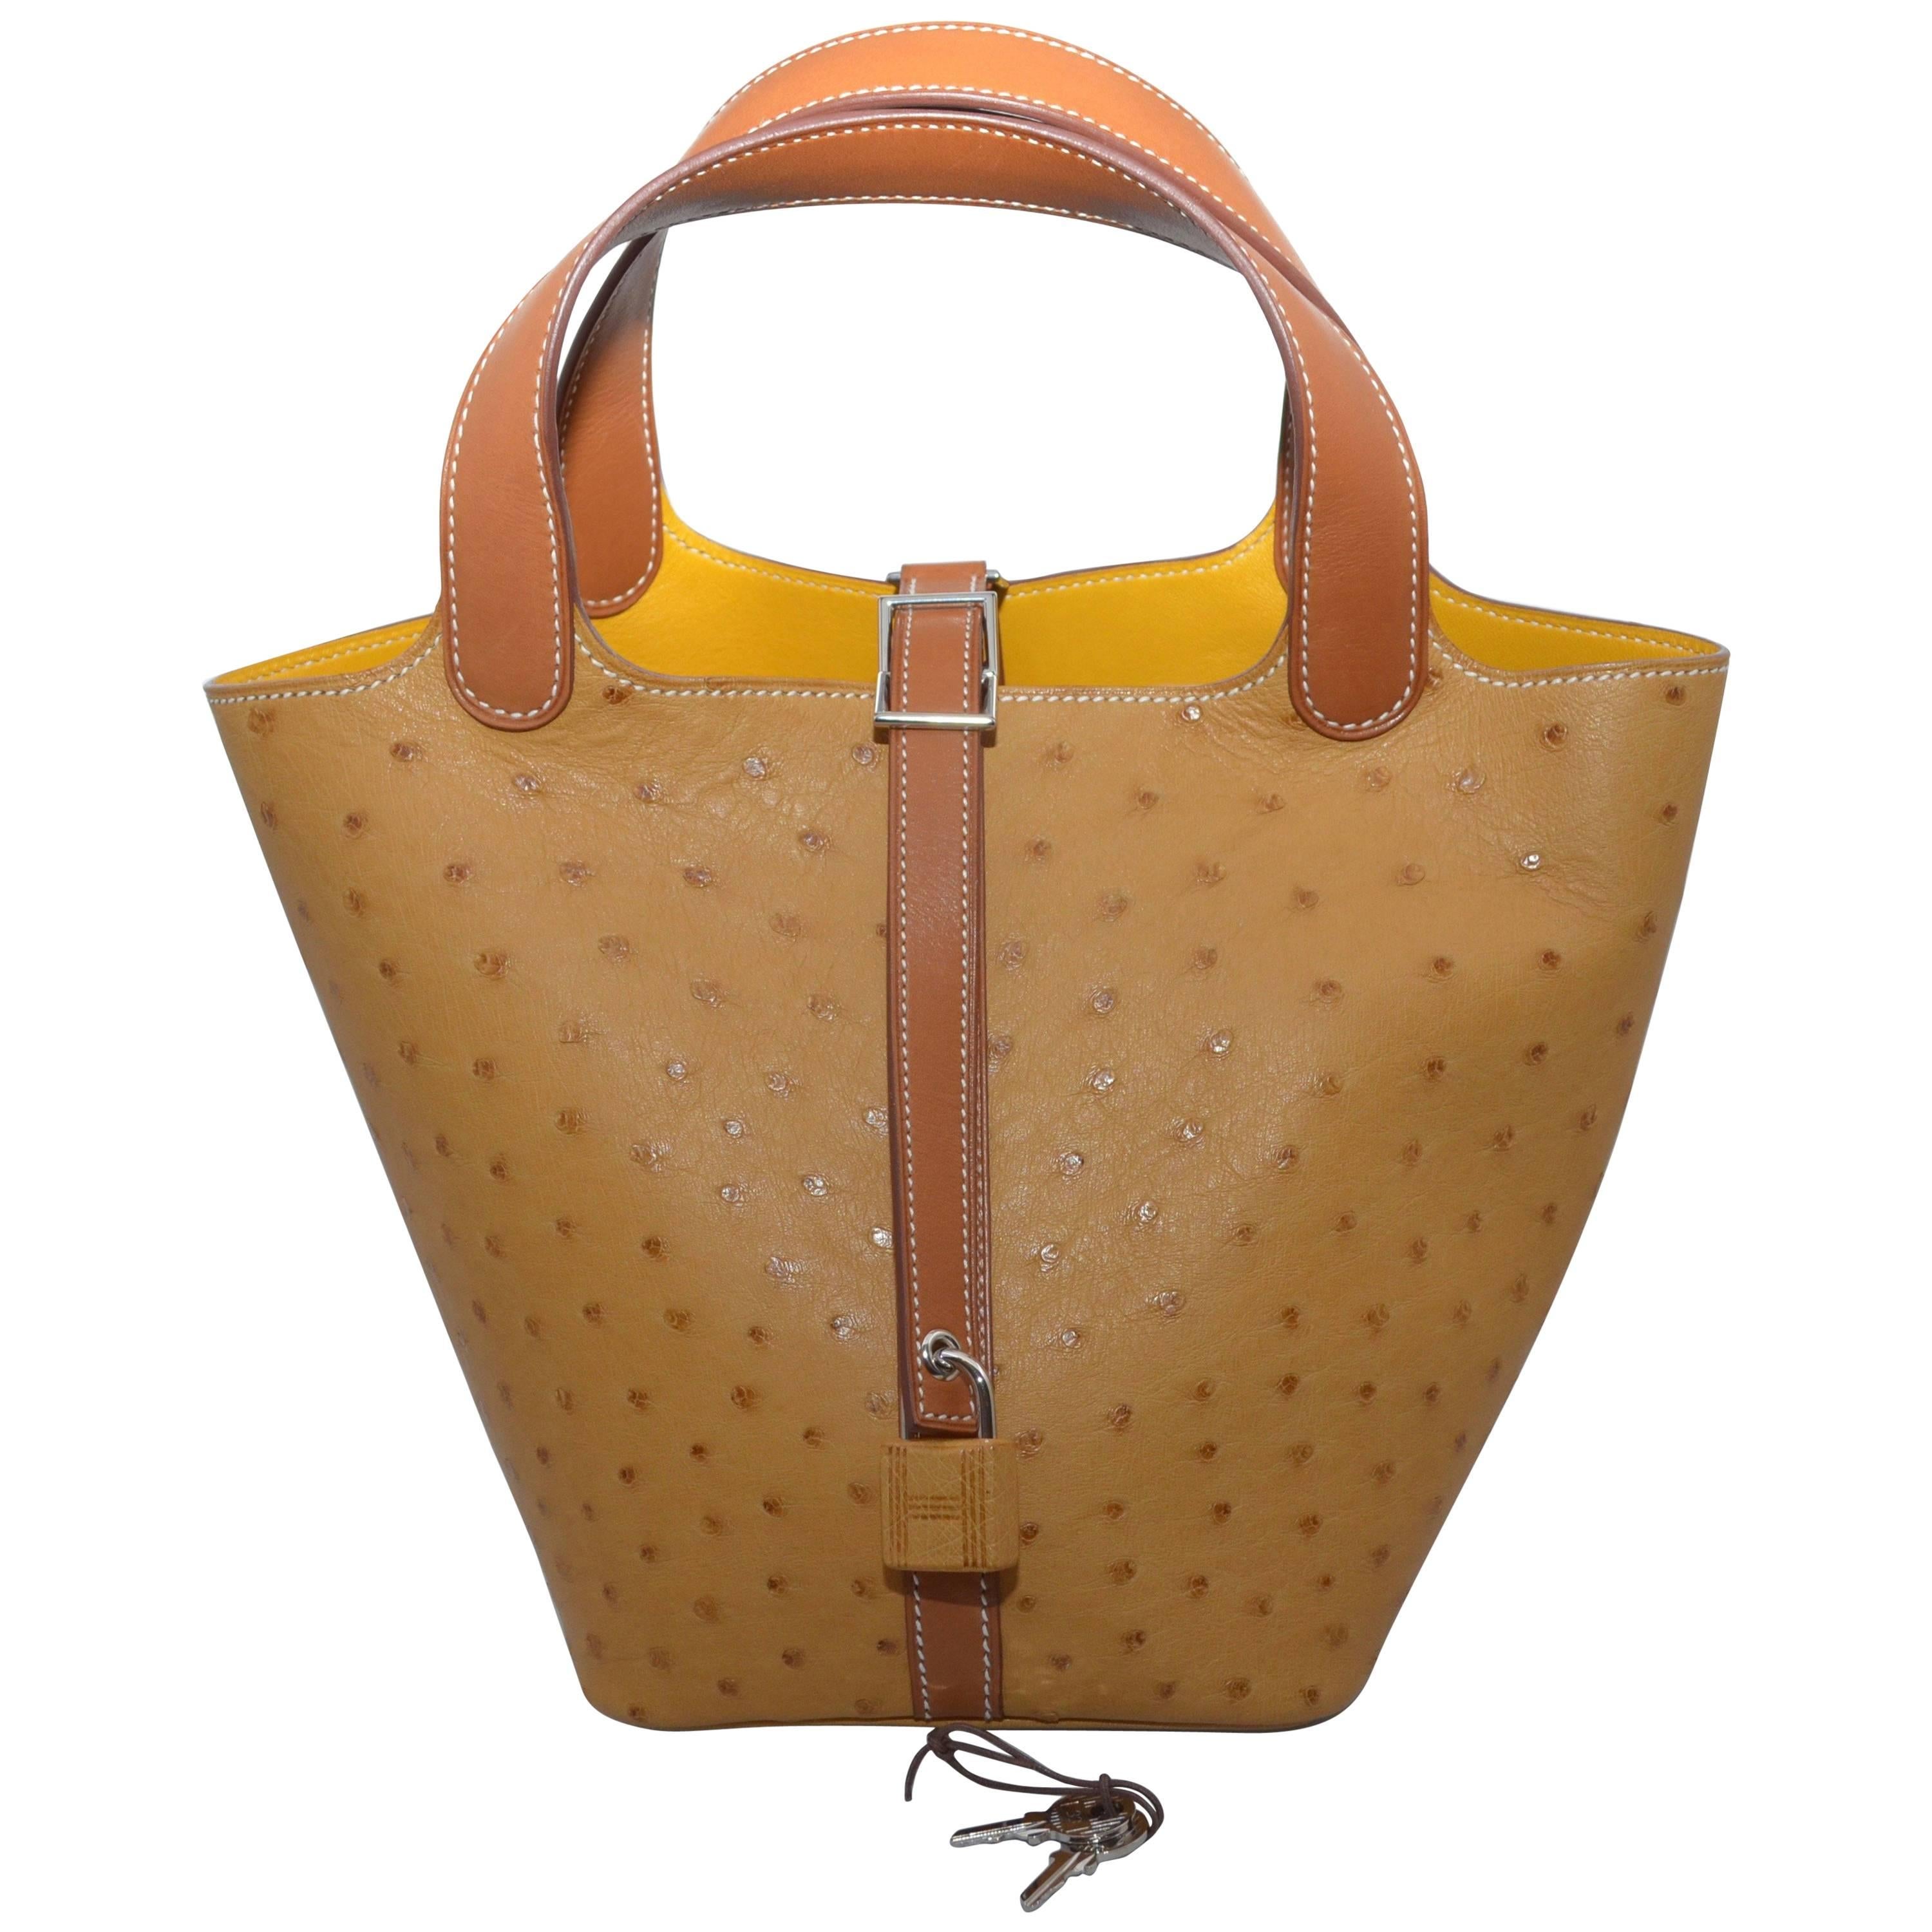 HERMÈS Ostrich Picotin Lock PM handbag in Pearl Gray with